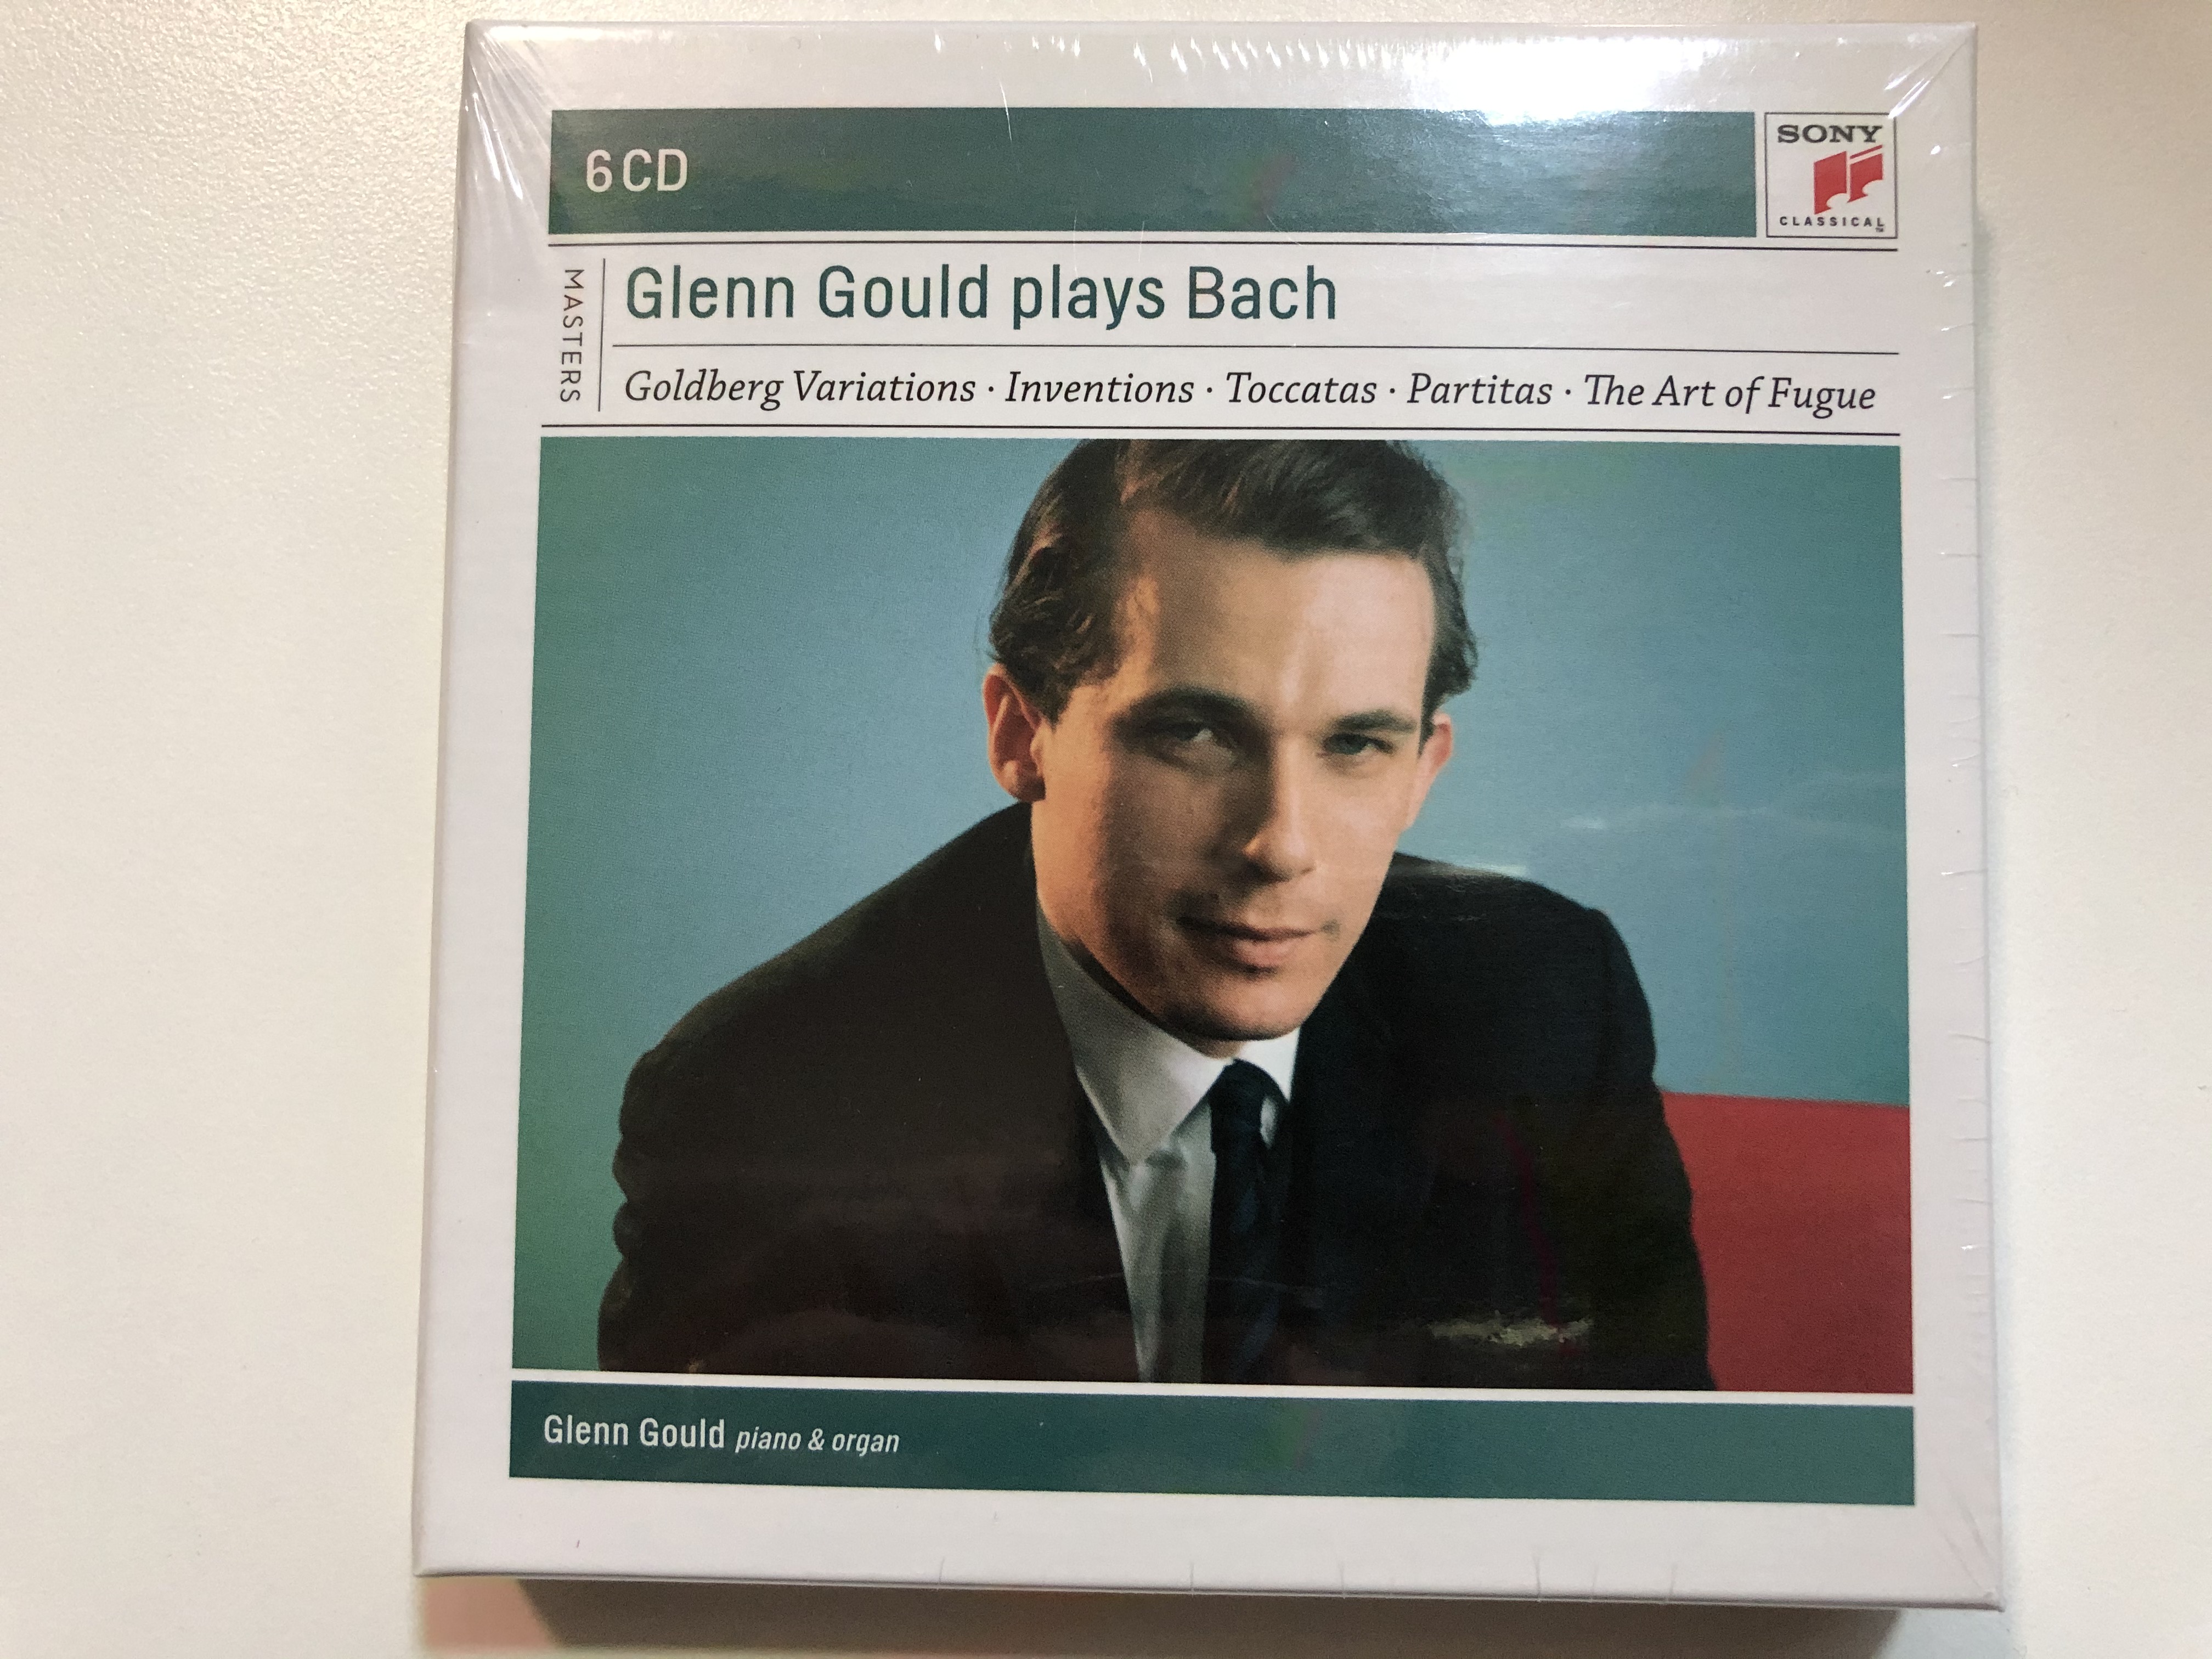 glenn-gould-plays-bach-goldberg-variations-inventions-toccatas-partitas-the-art-of-fugue-glenn-gould-piano-organ-sony-classical-6x-audio-cd-2011-stereo-mono-88697683932-1-.jpg